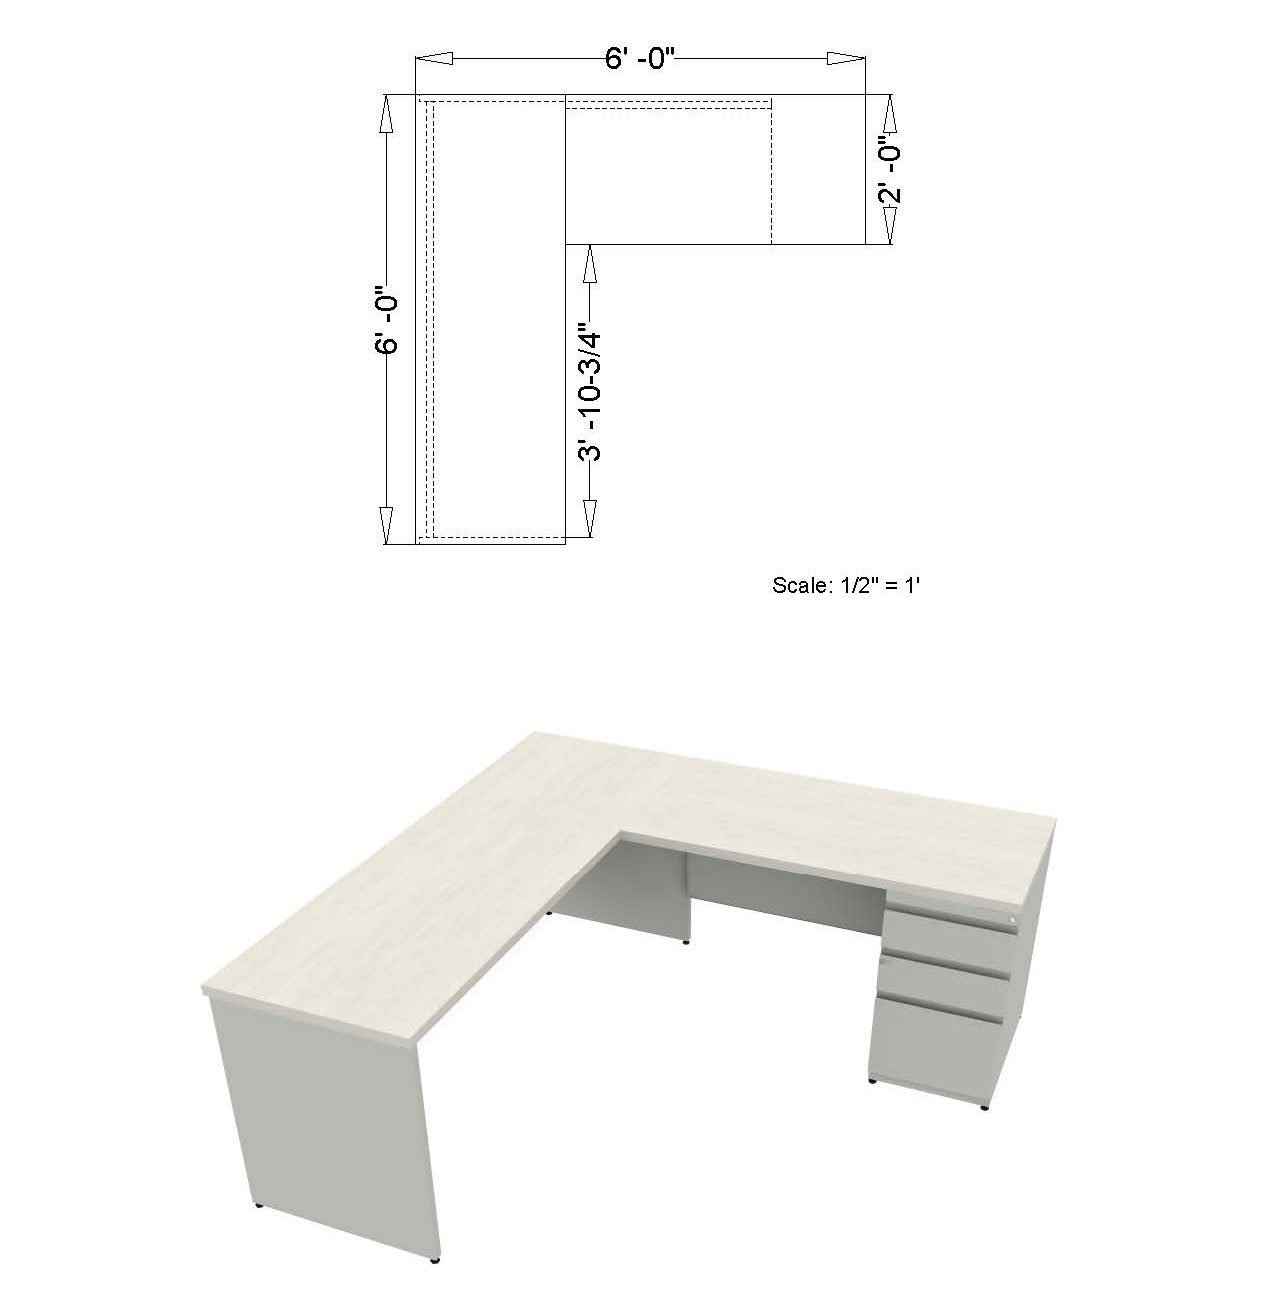 6x6 desk layout